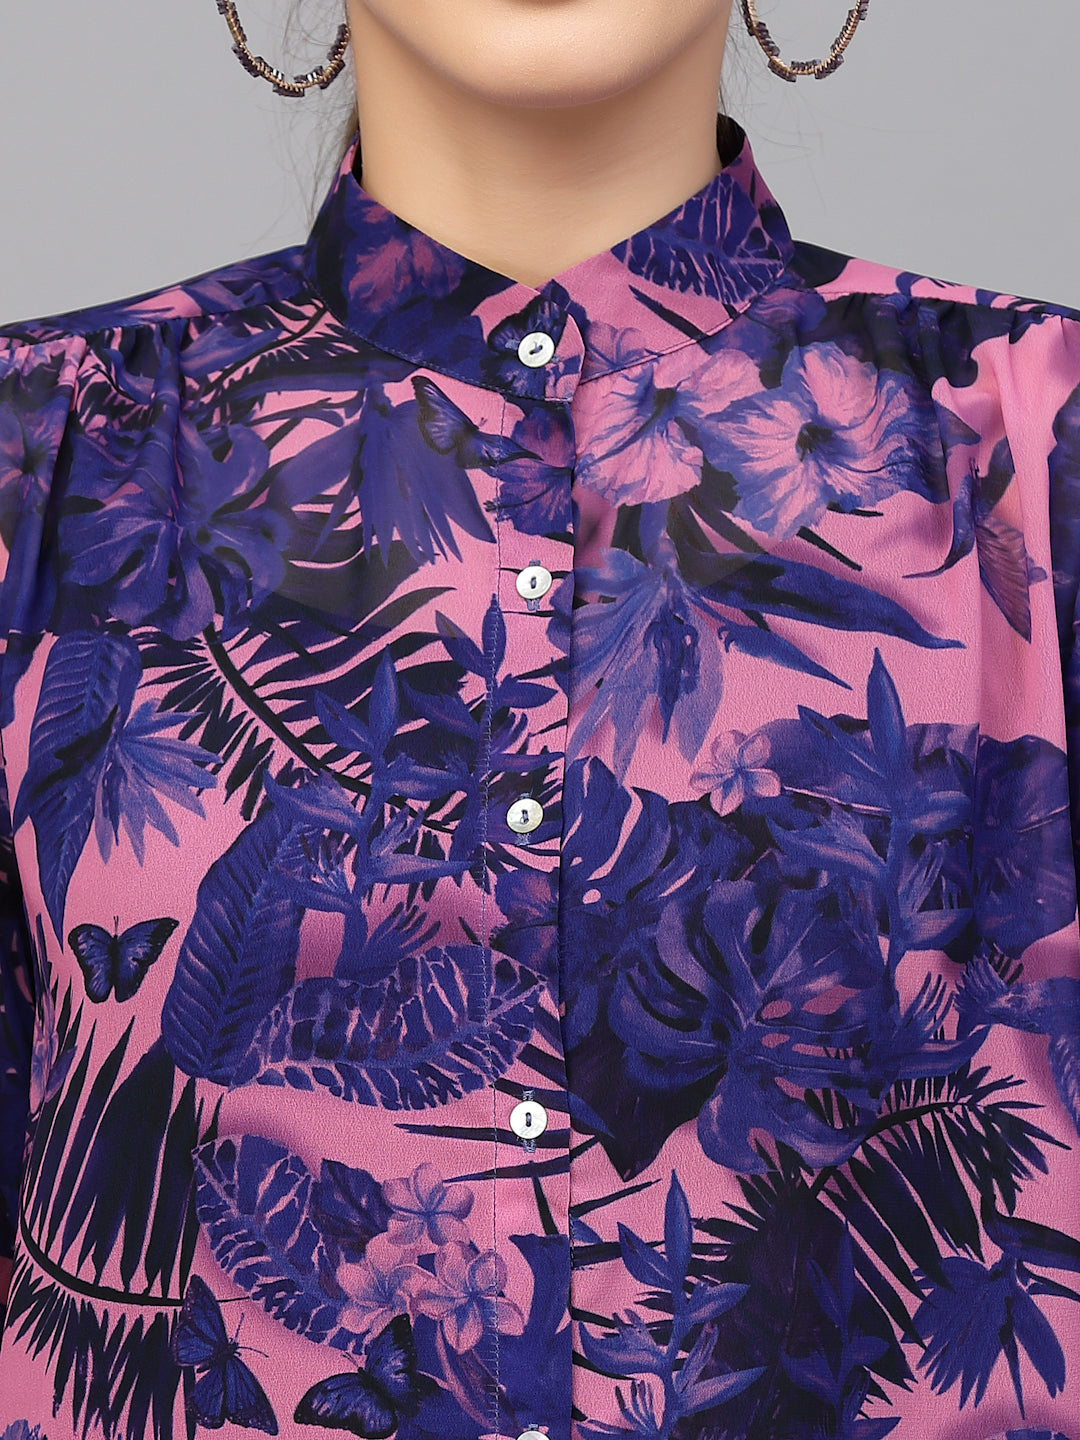 Valbone Women’s Purple Georgette Printed Shirt